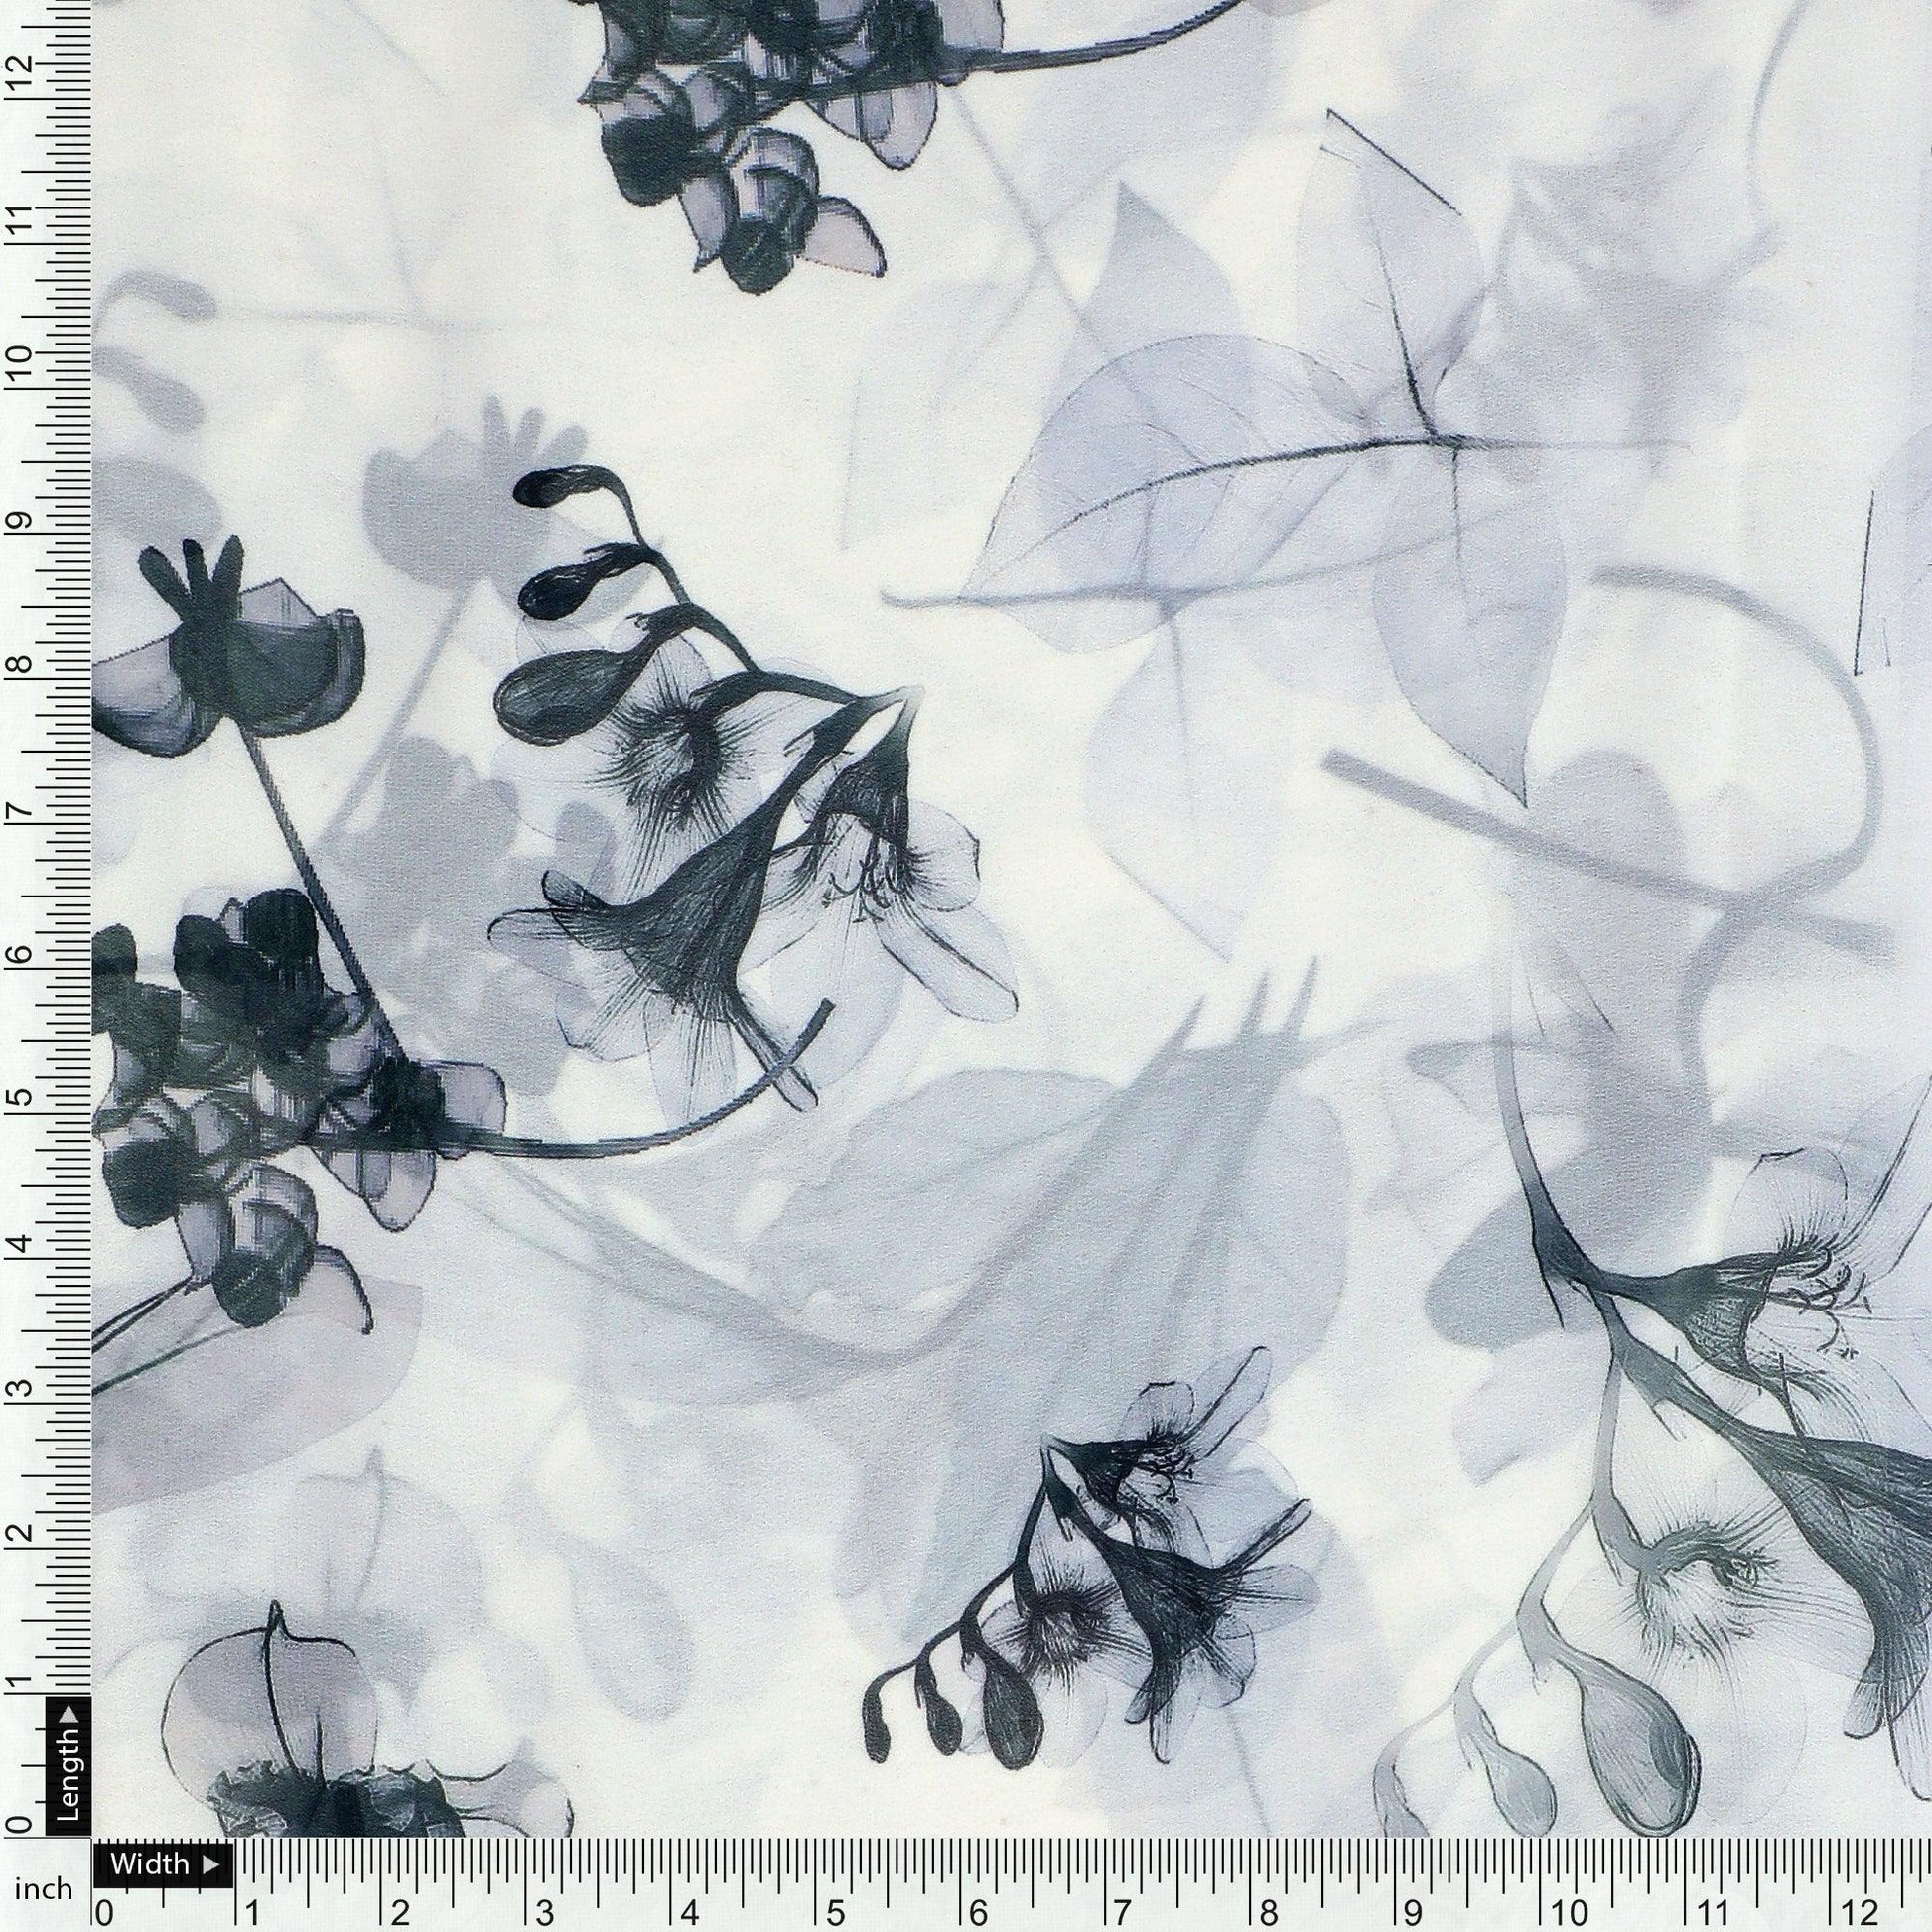 Black Floating Flowers Digital Printed Fabric - Weightless - FAB VOGUE Studio®